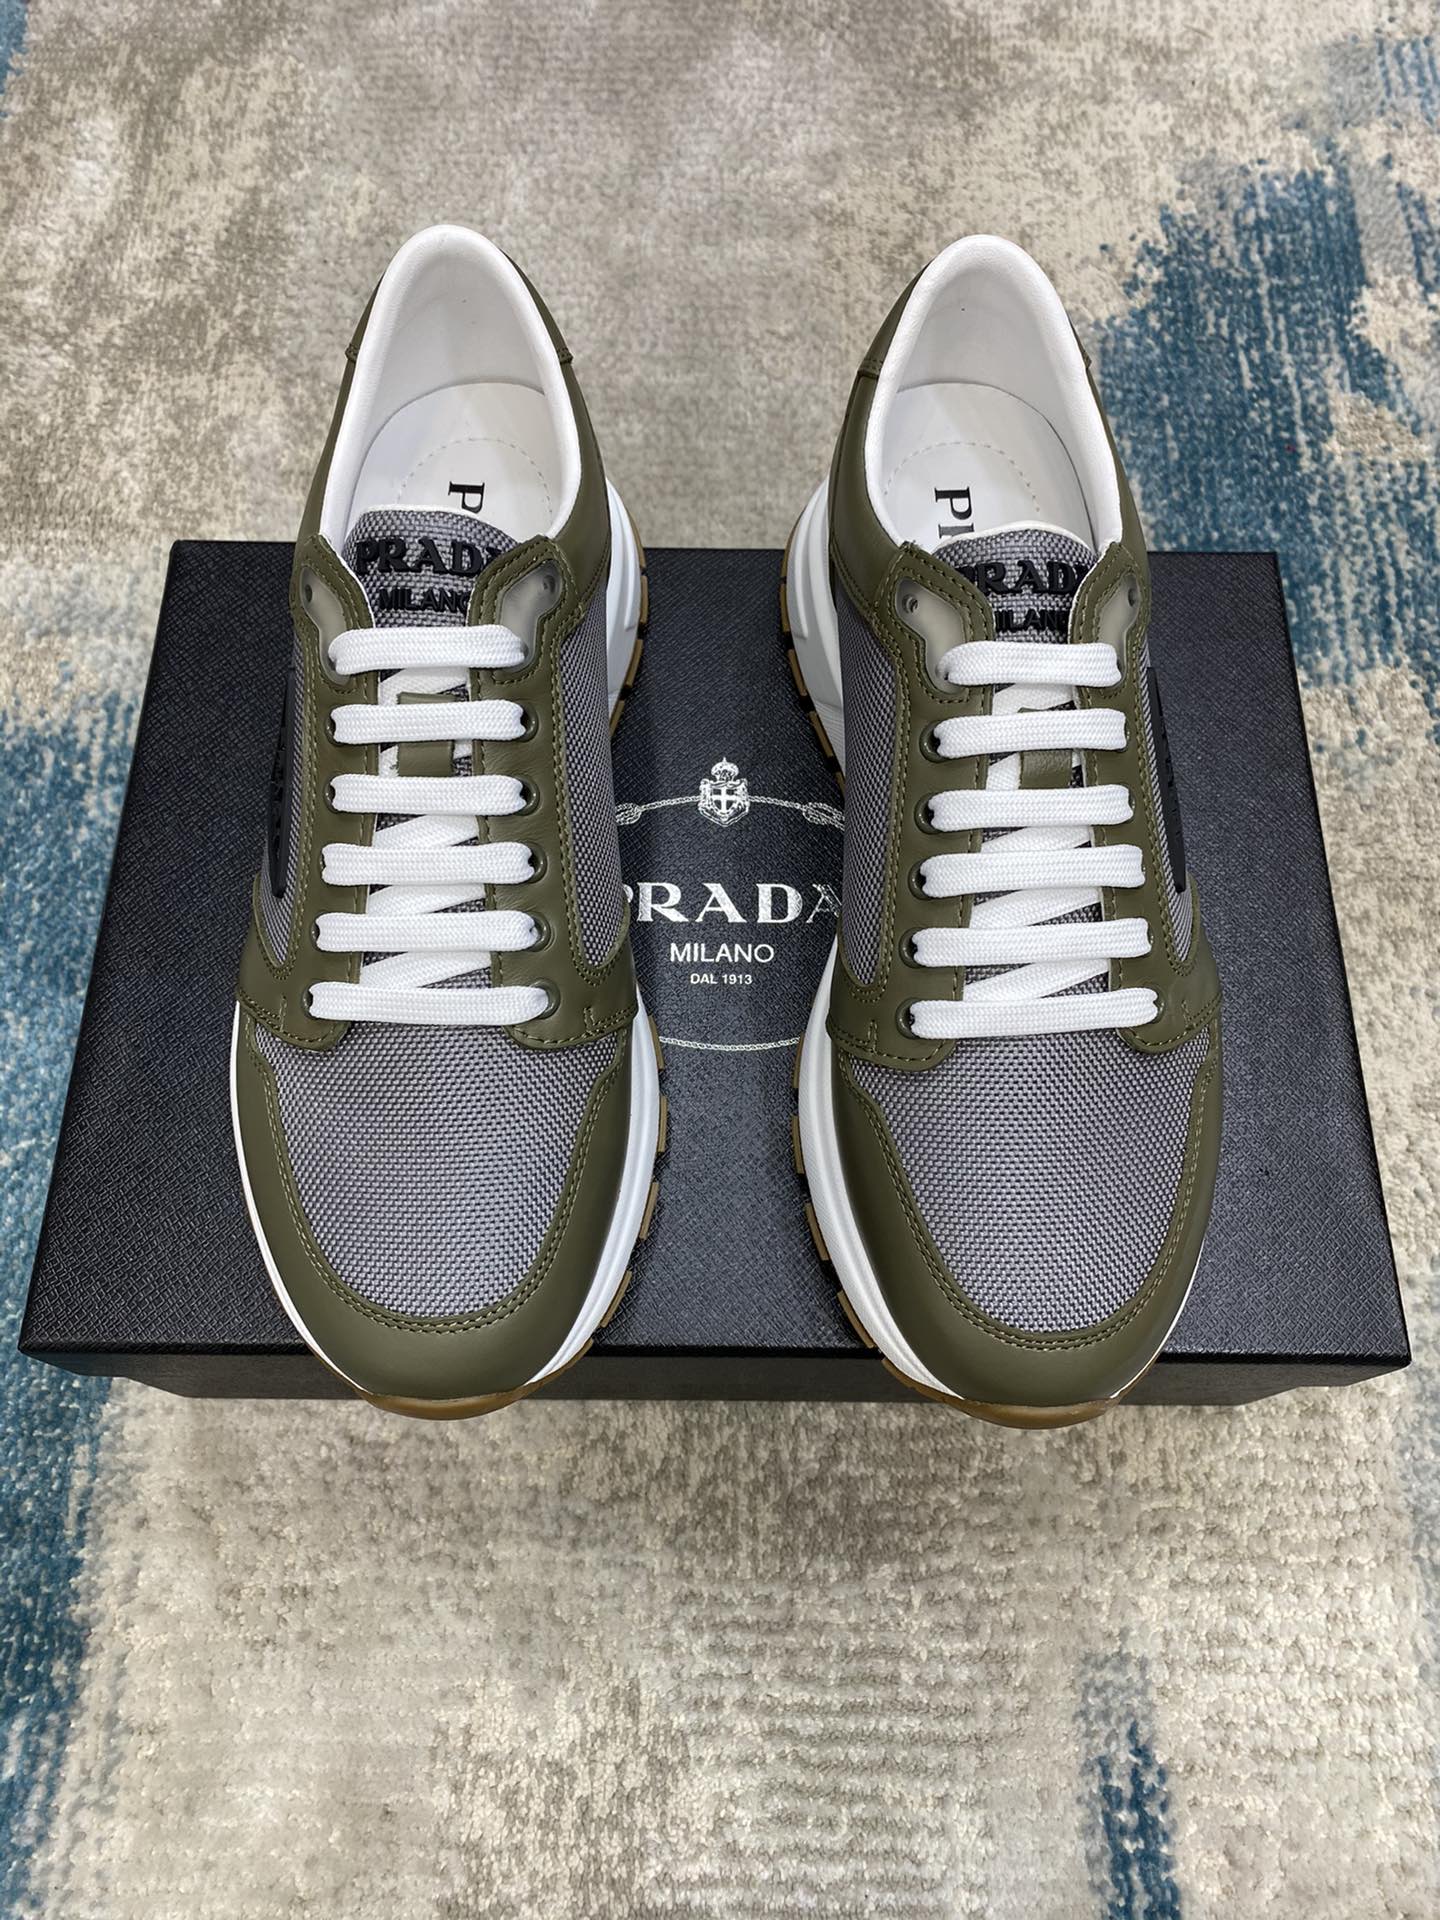 Prada Leisure Sneaker in Brown with Blue